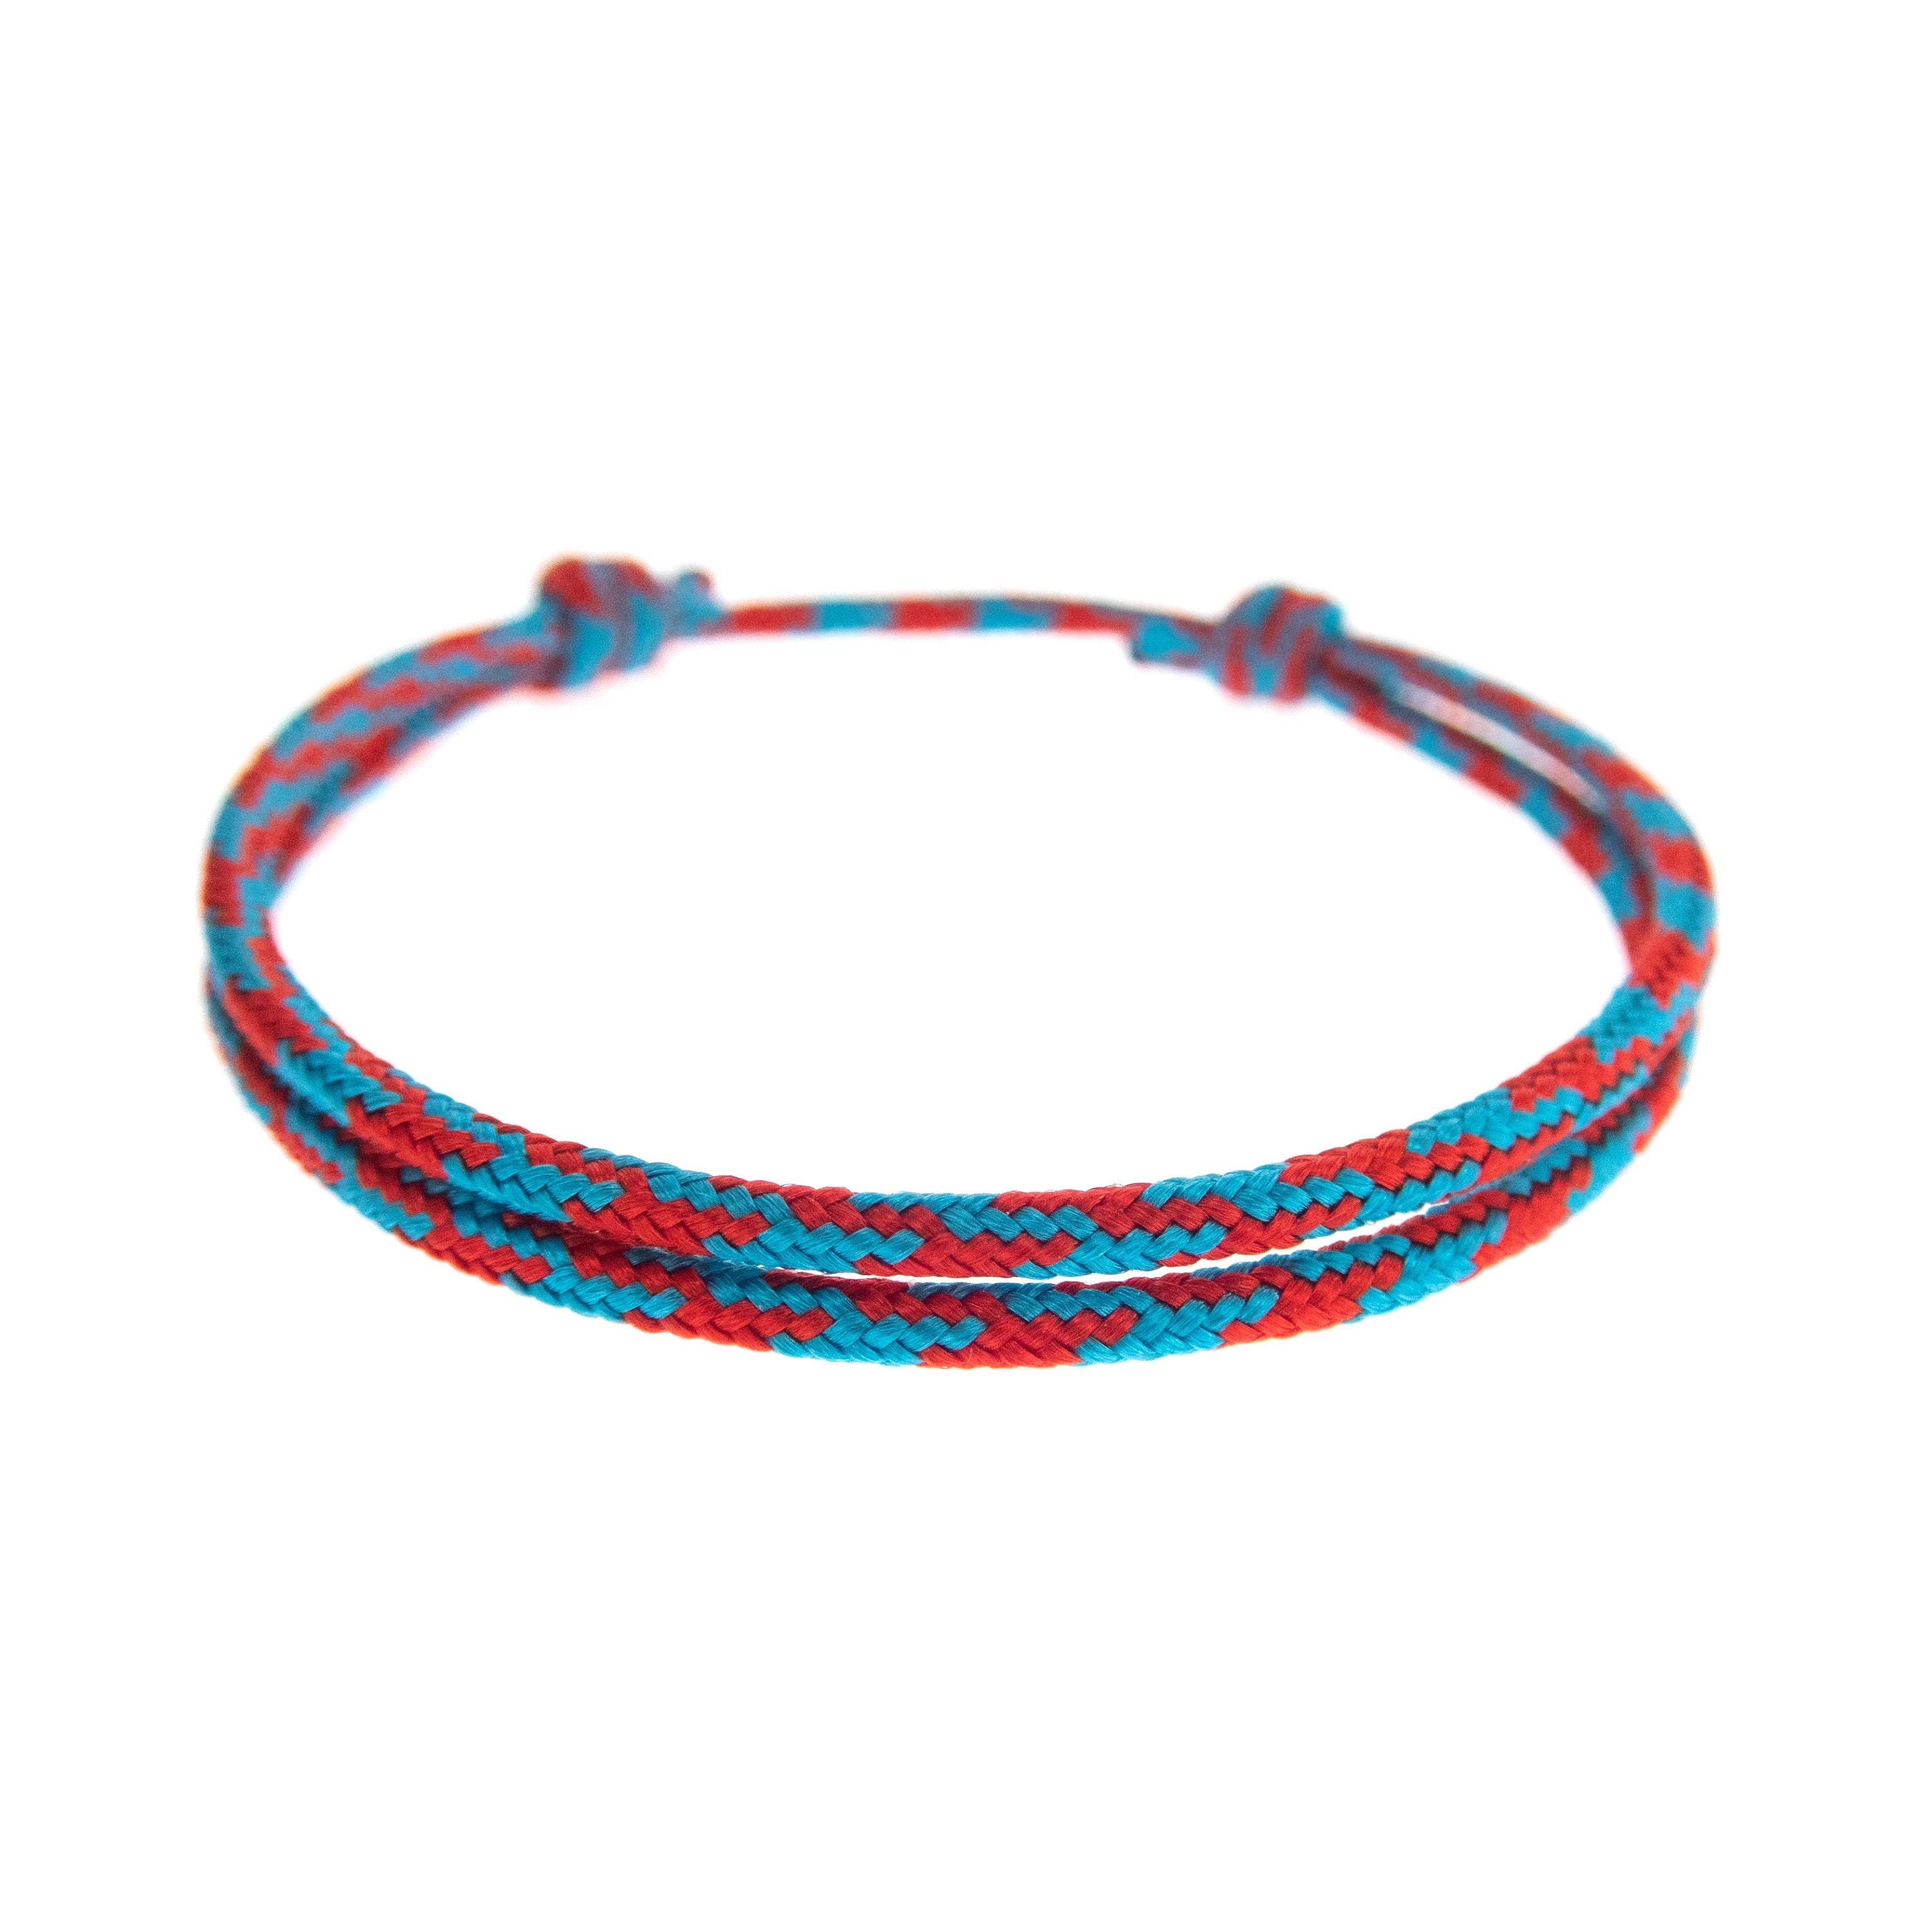 Very Simple Bracelet Adjustable. Friendship Bracelets String. Easy